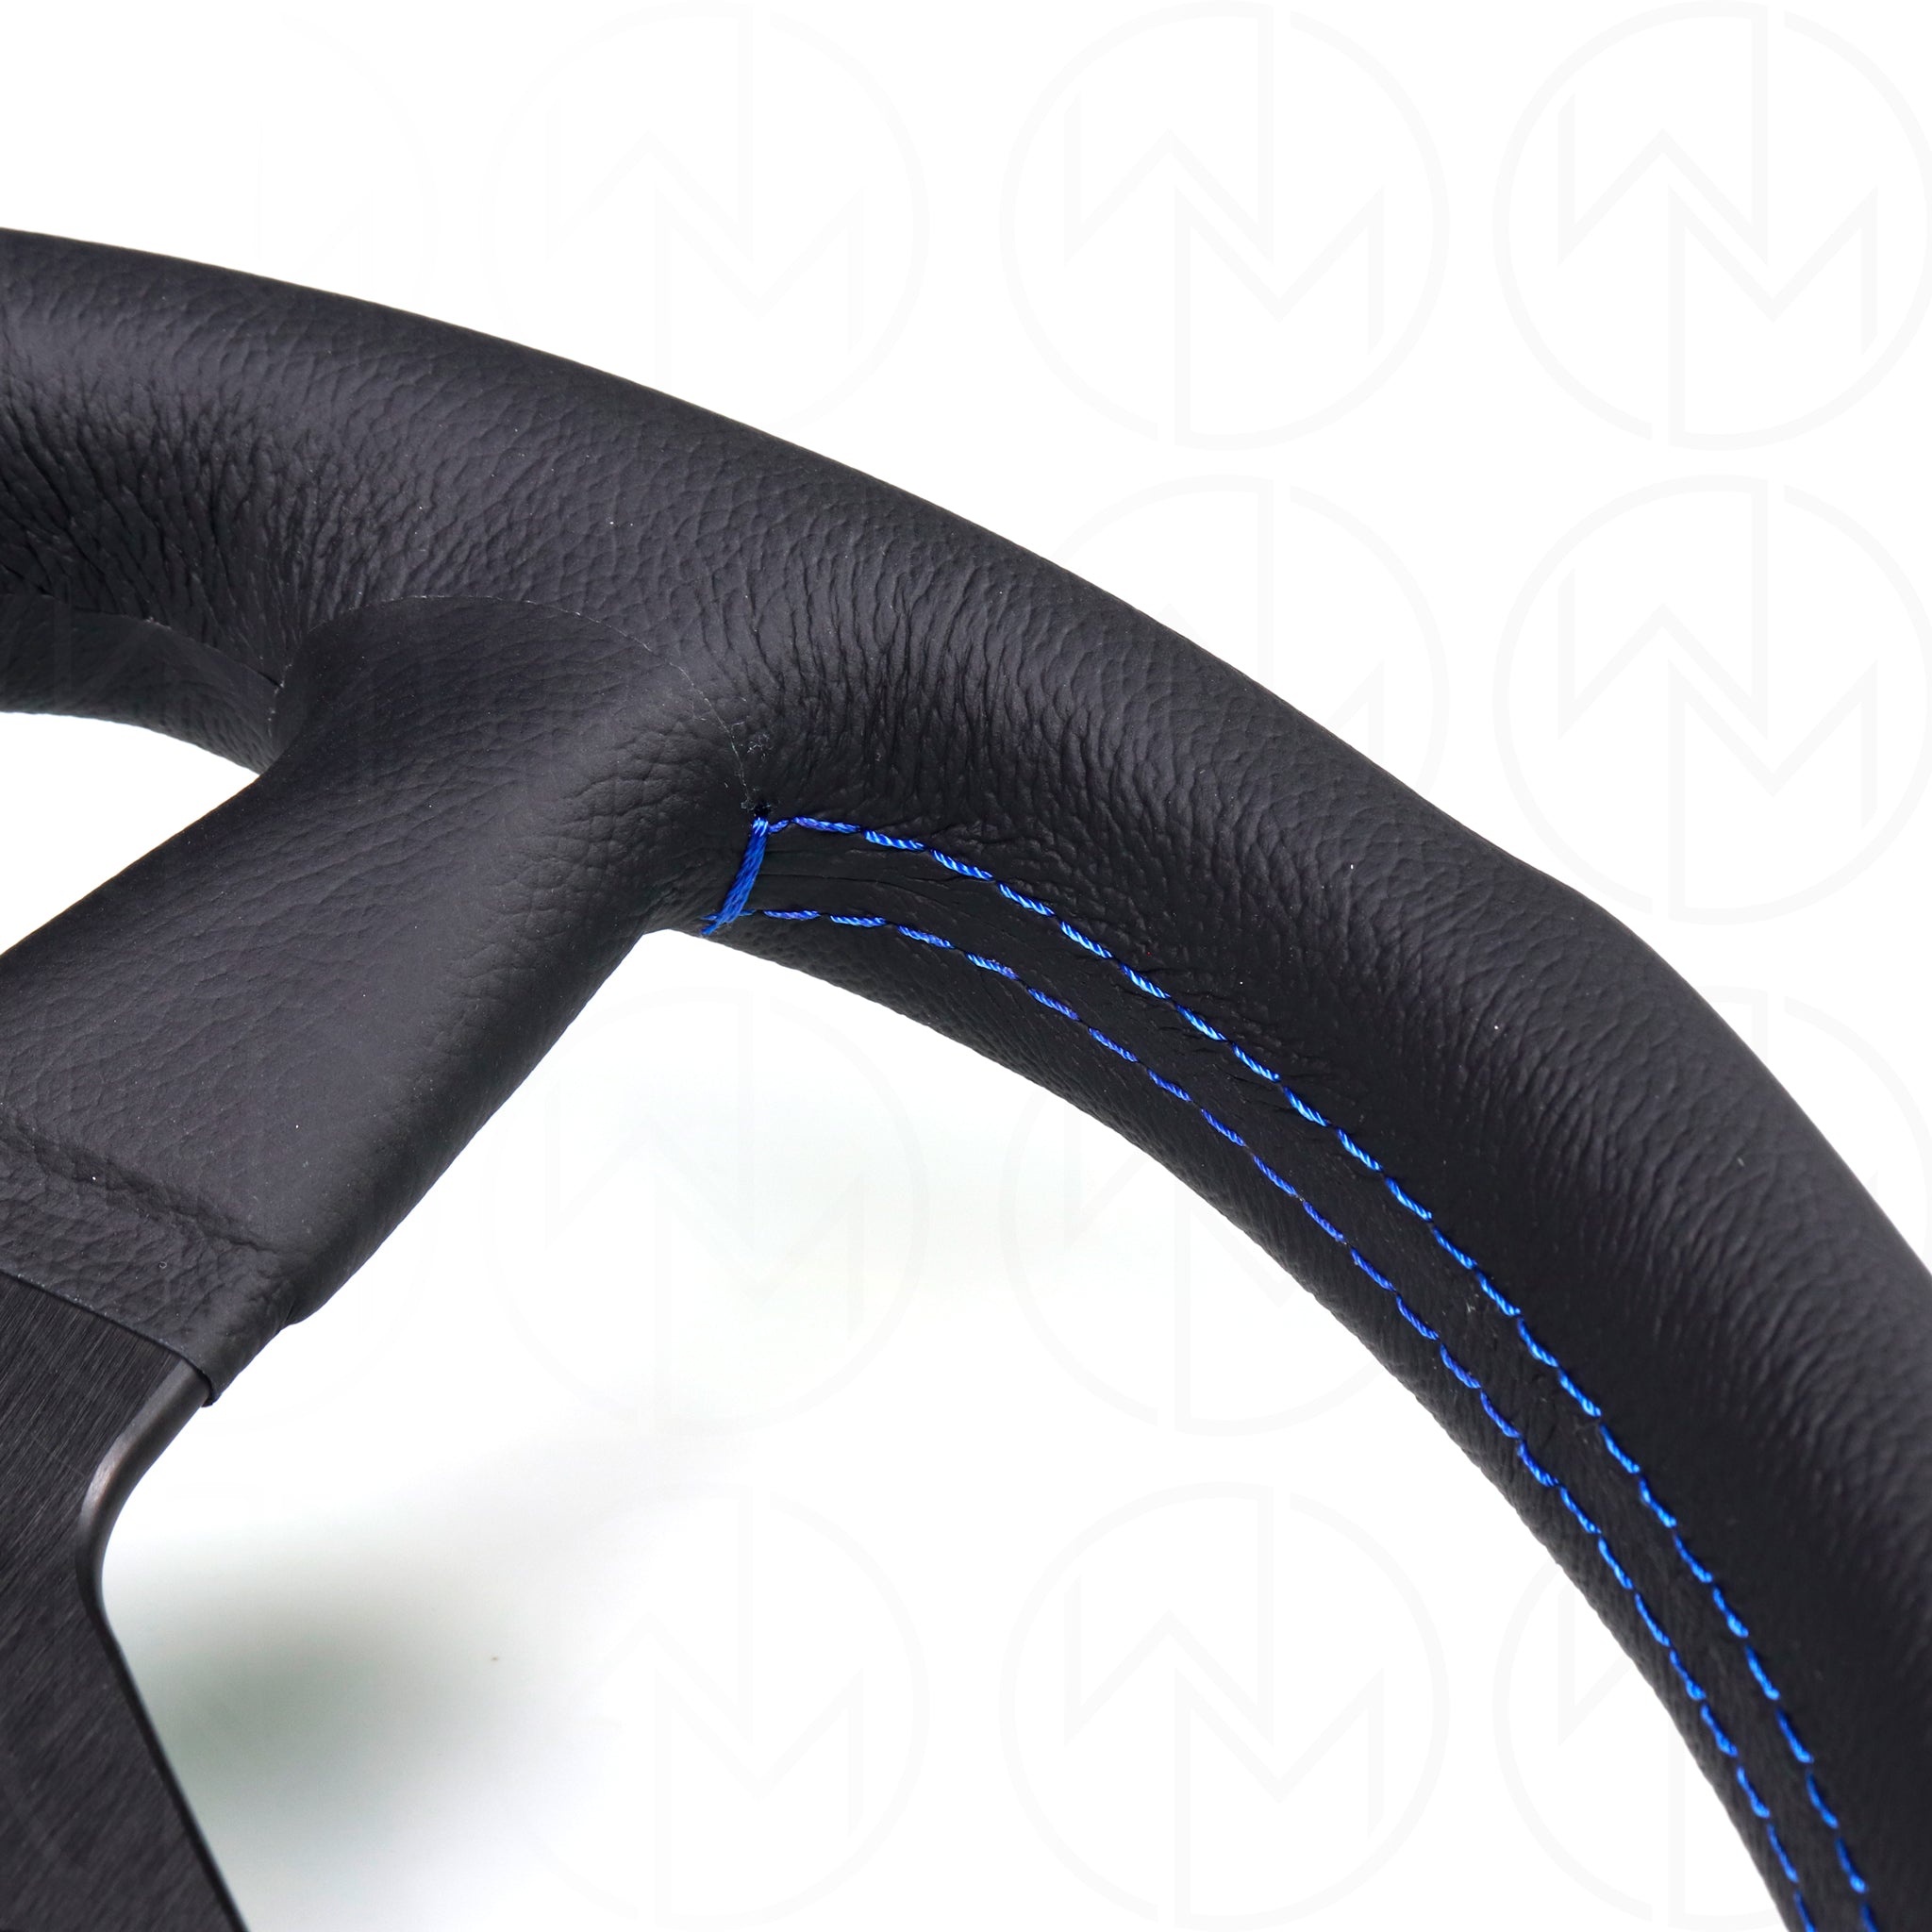 Momo Monte Carlo Steering Wheel - 350mm Leather w/ Blue Stitch